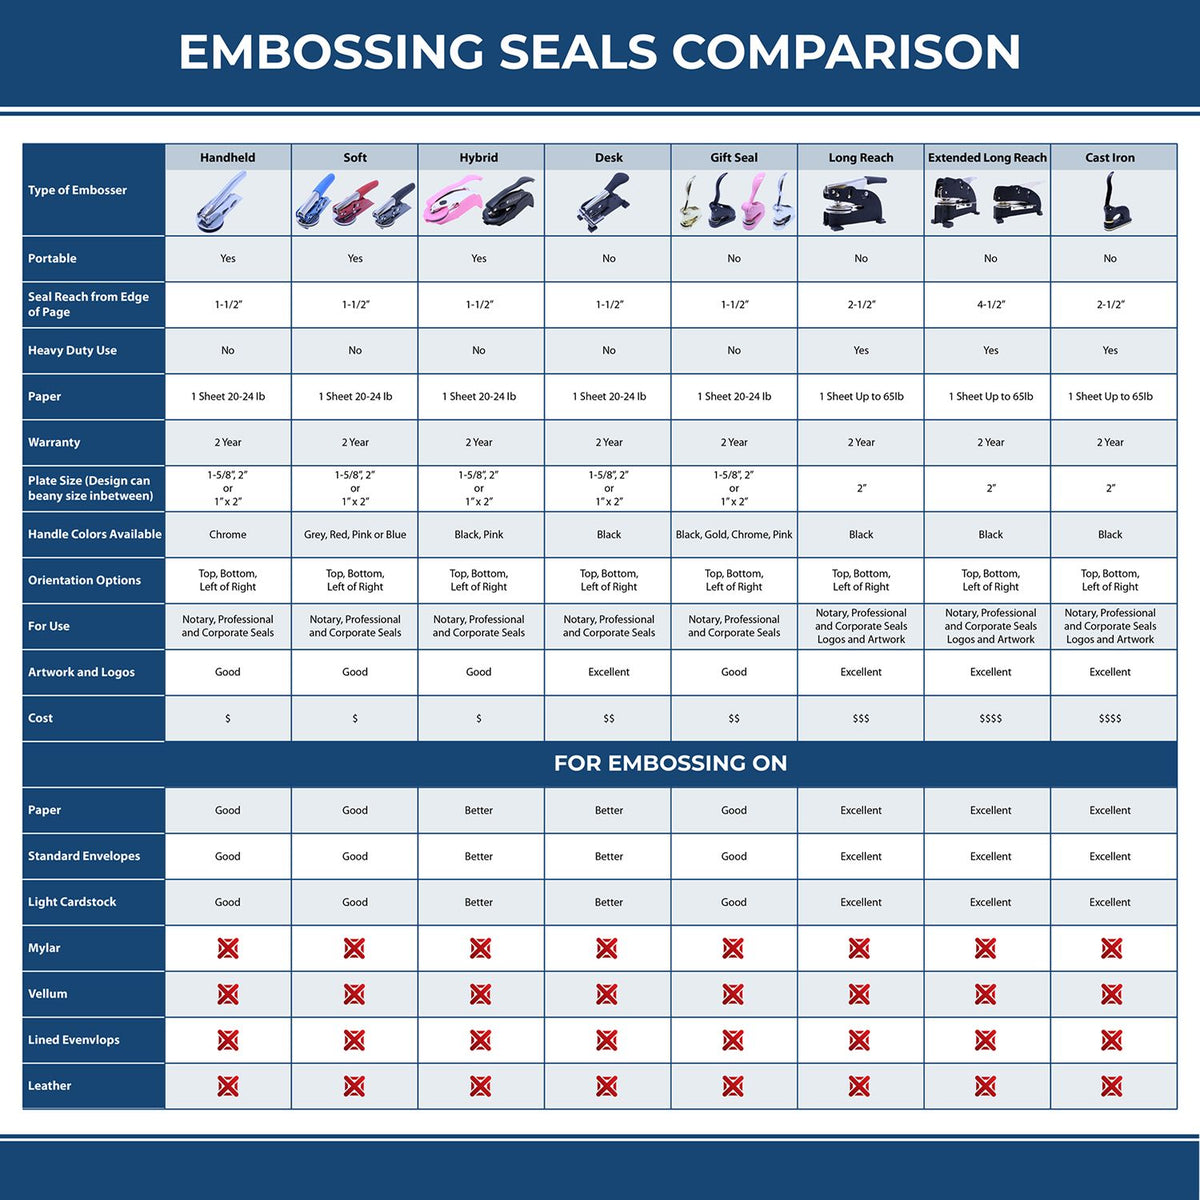 Real Estate Appraiser Cast Iron Desk Seal Embosser 3027REA Embossing Seal Comparison